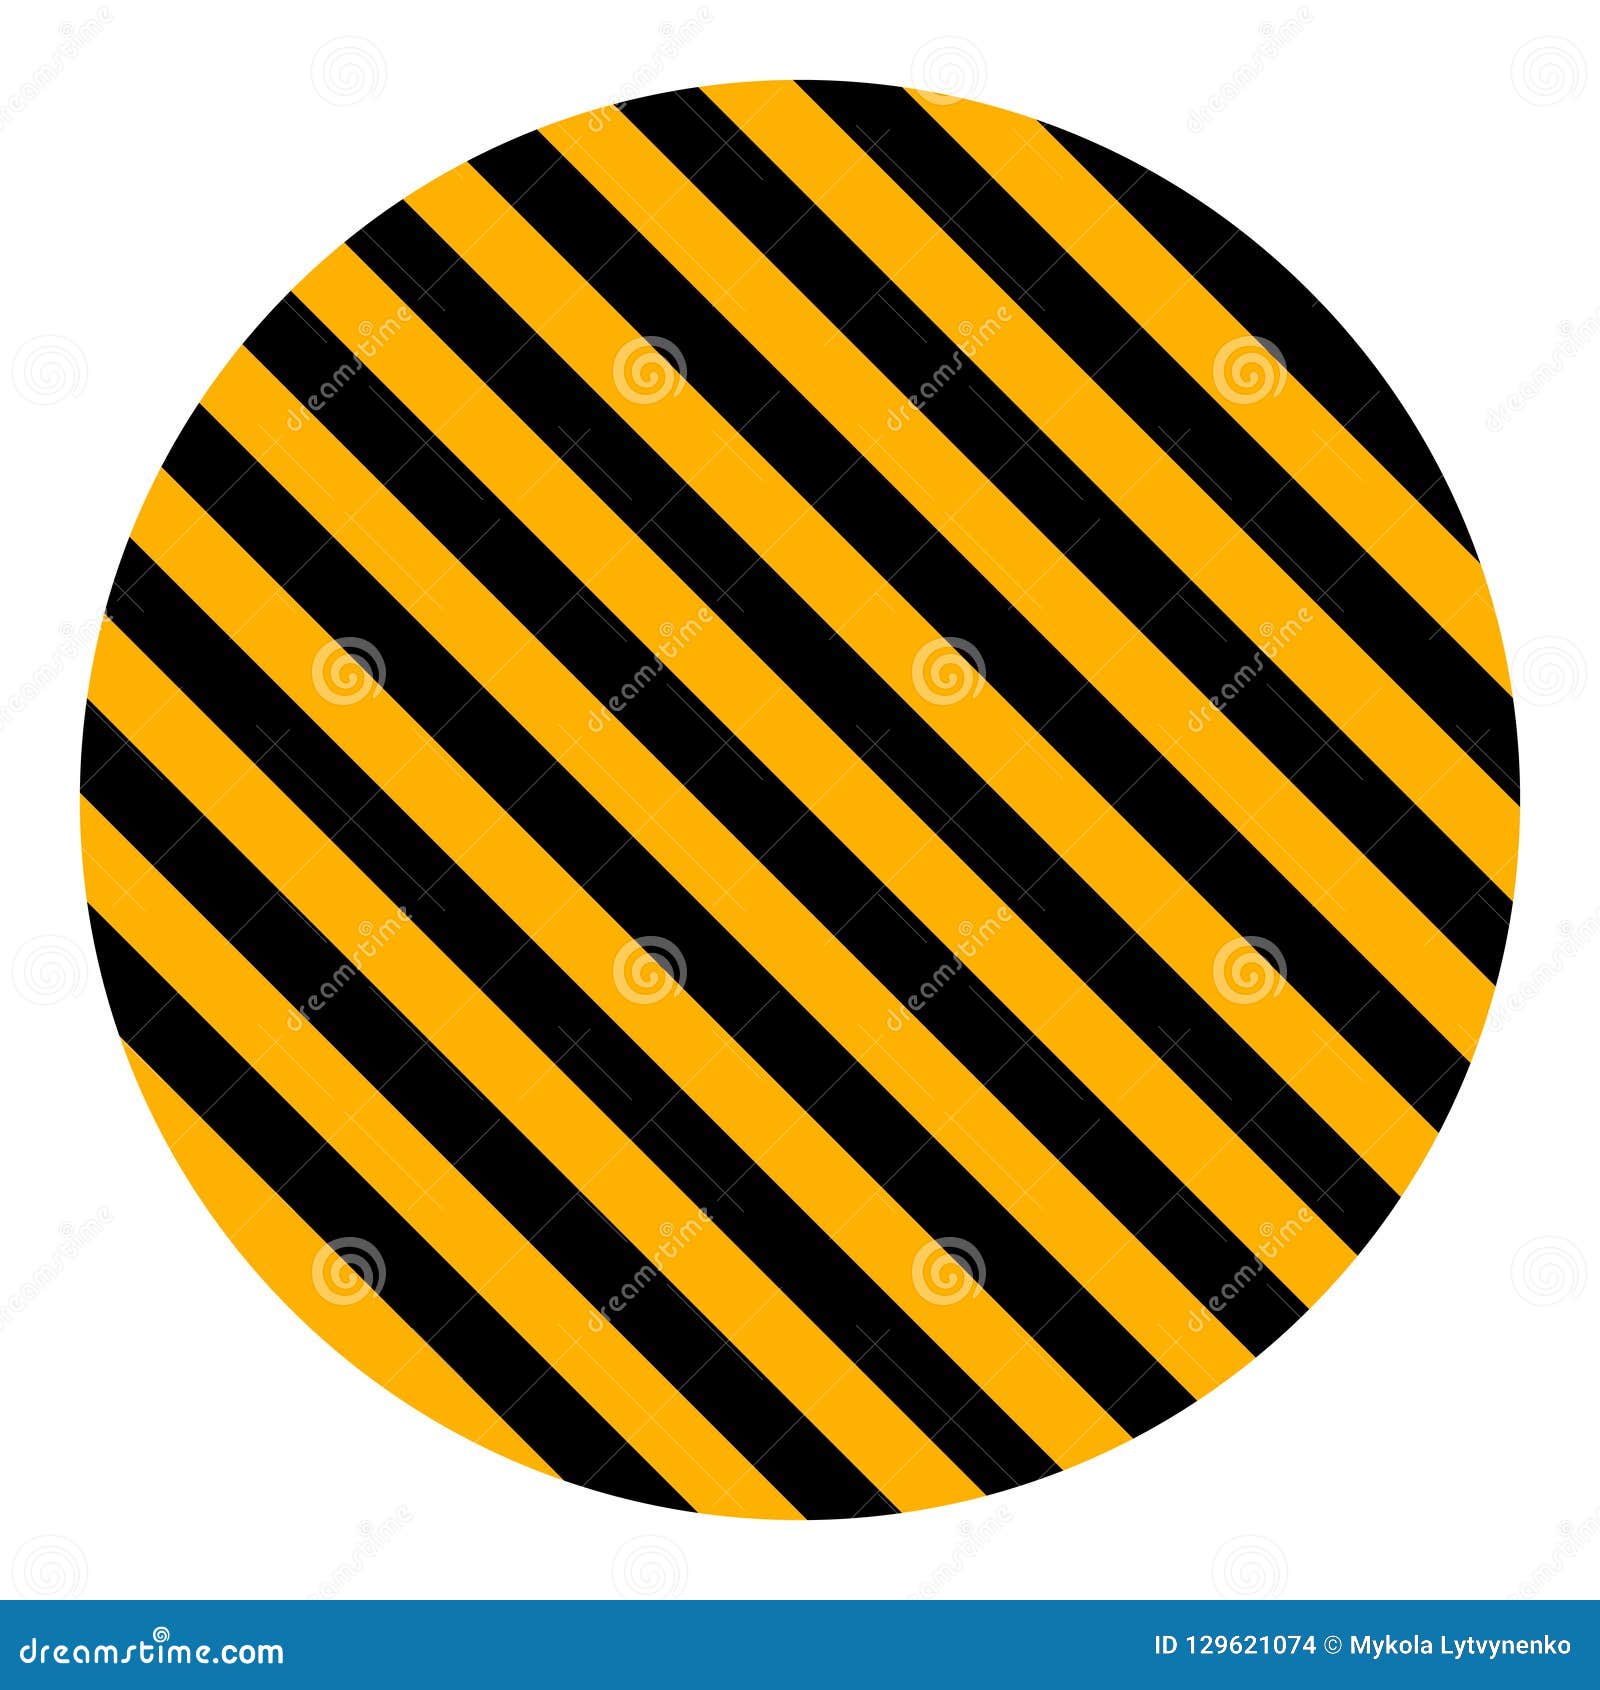 circle yellow and black diagonal stripes,  safety stripe warning, circle warn caution construction background